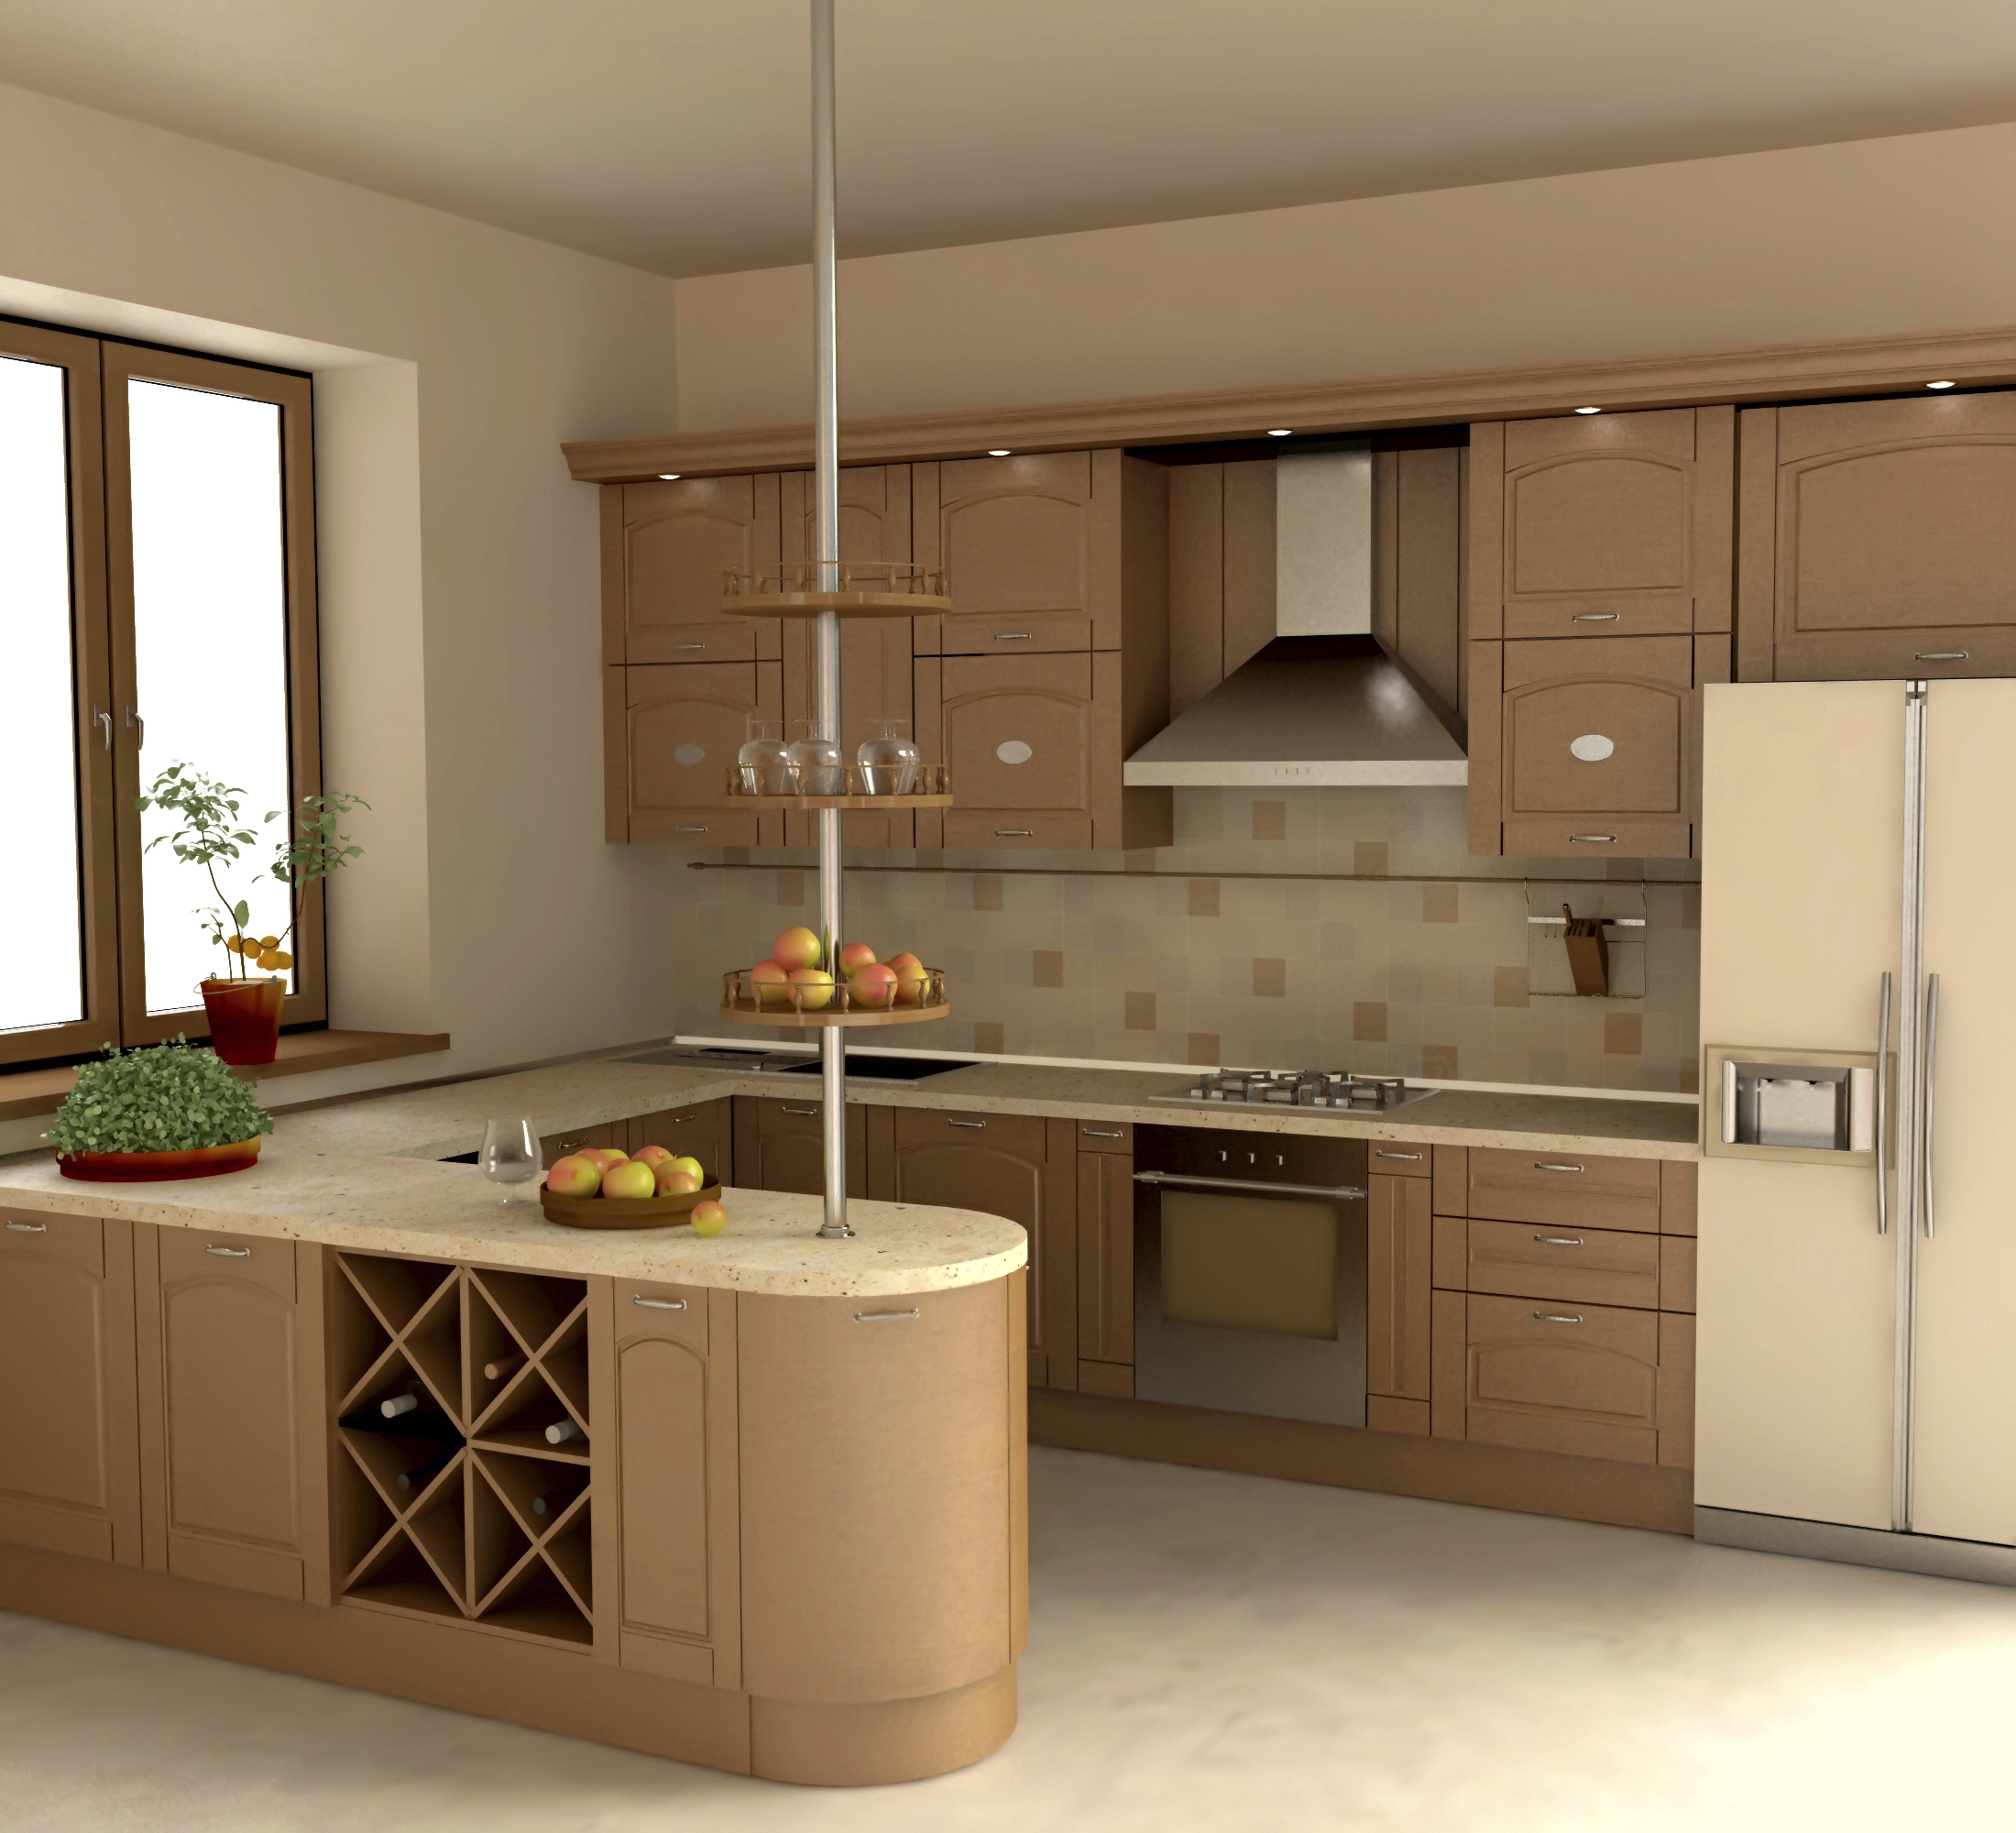 Kitchen interior with wooden furniture - Kitchen Cabinets and Granite